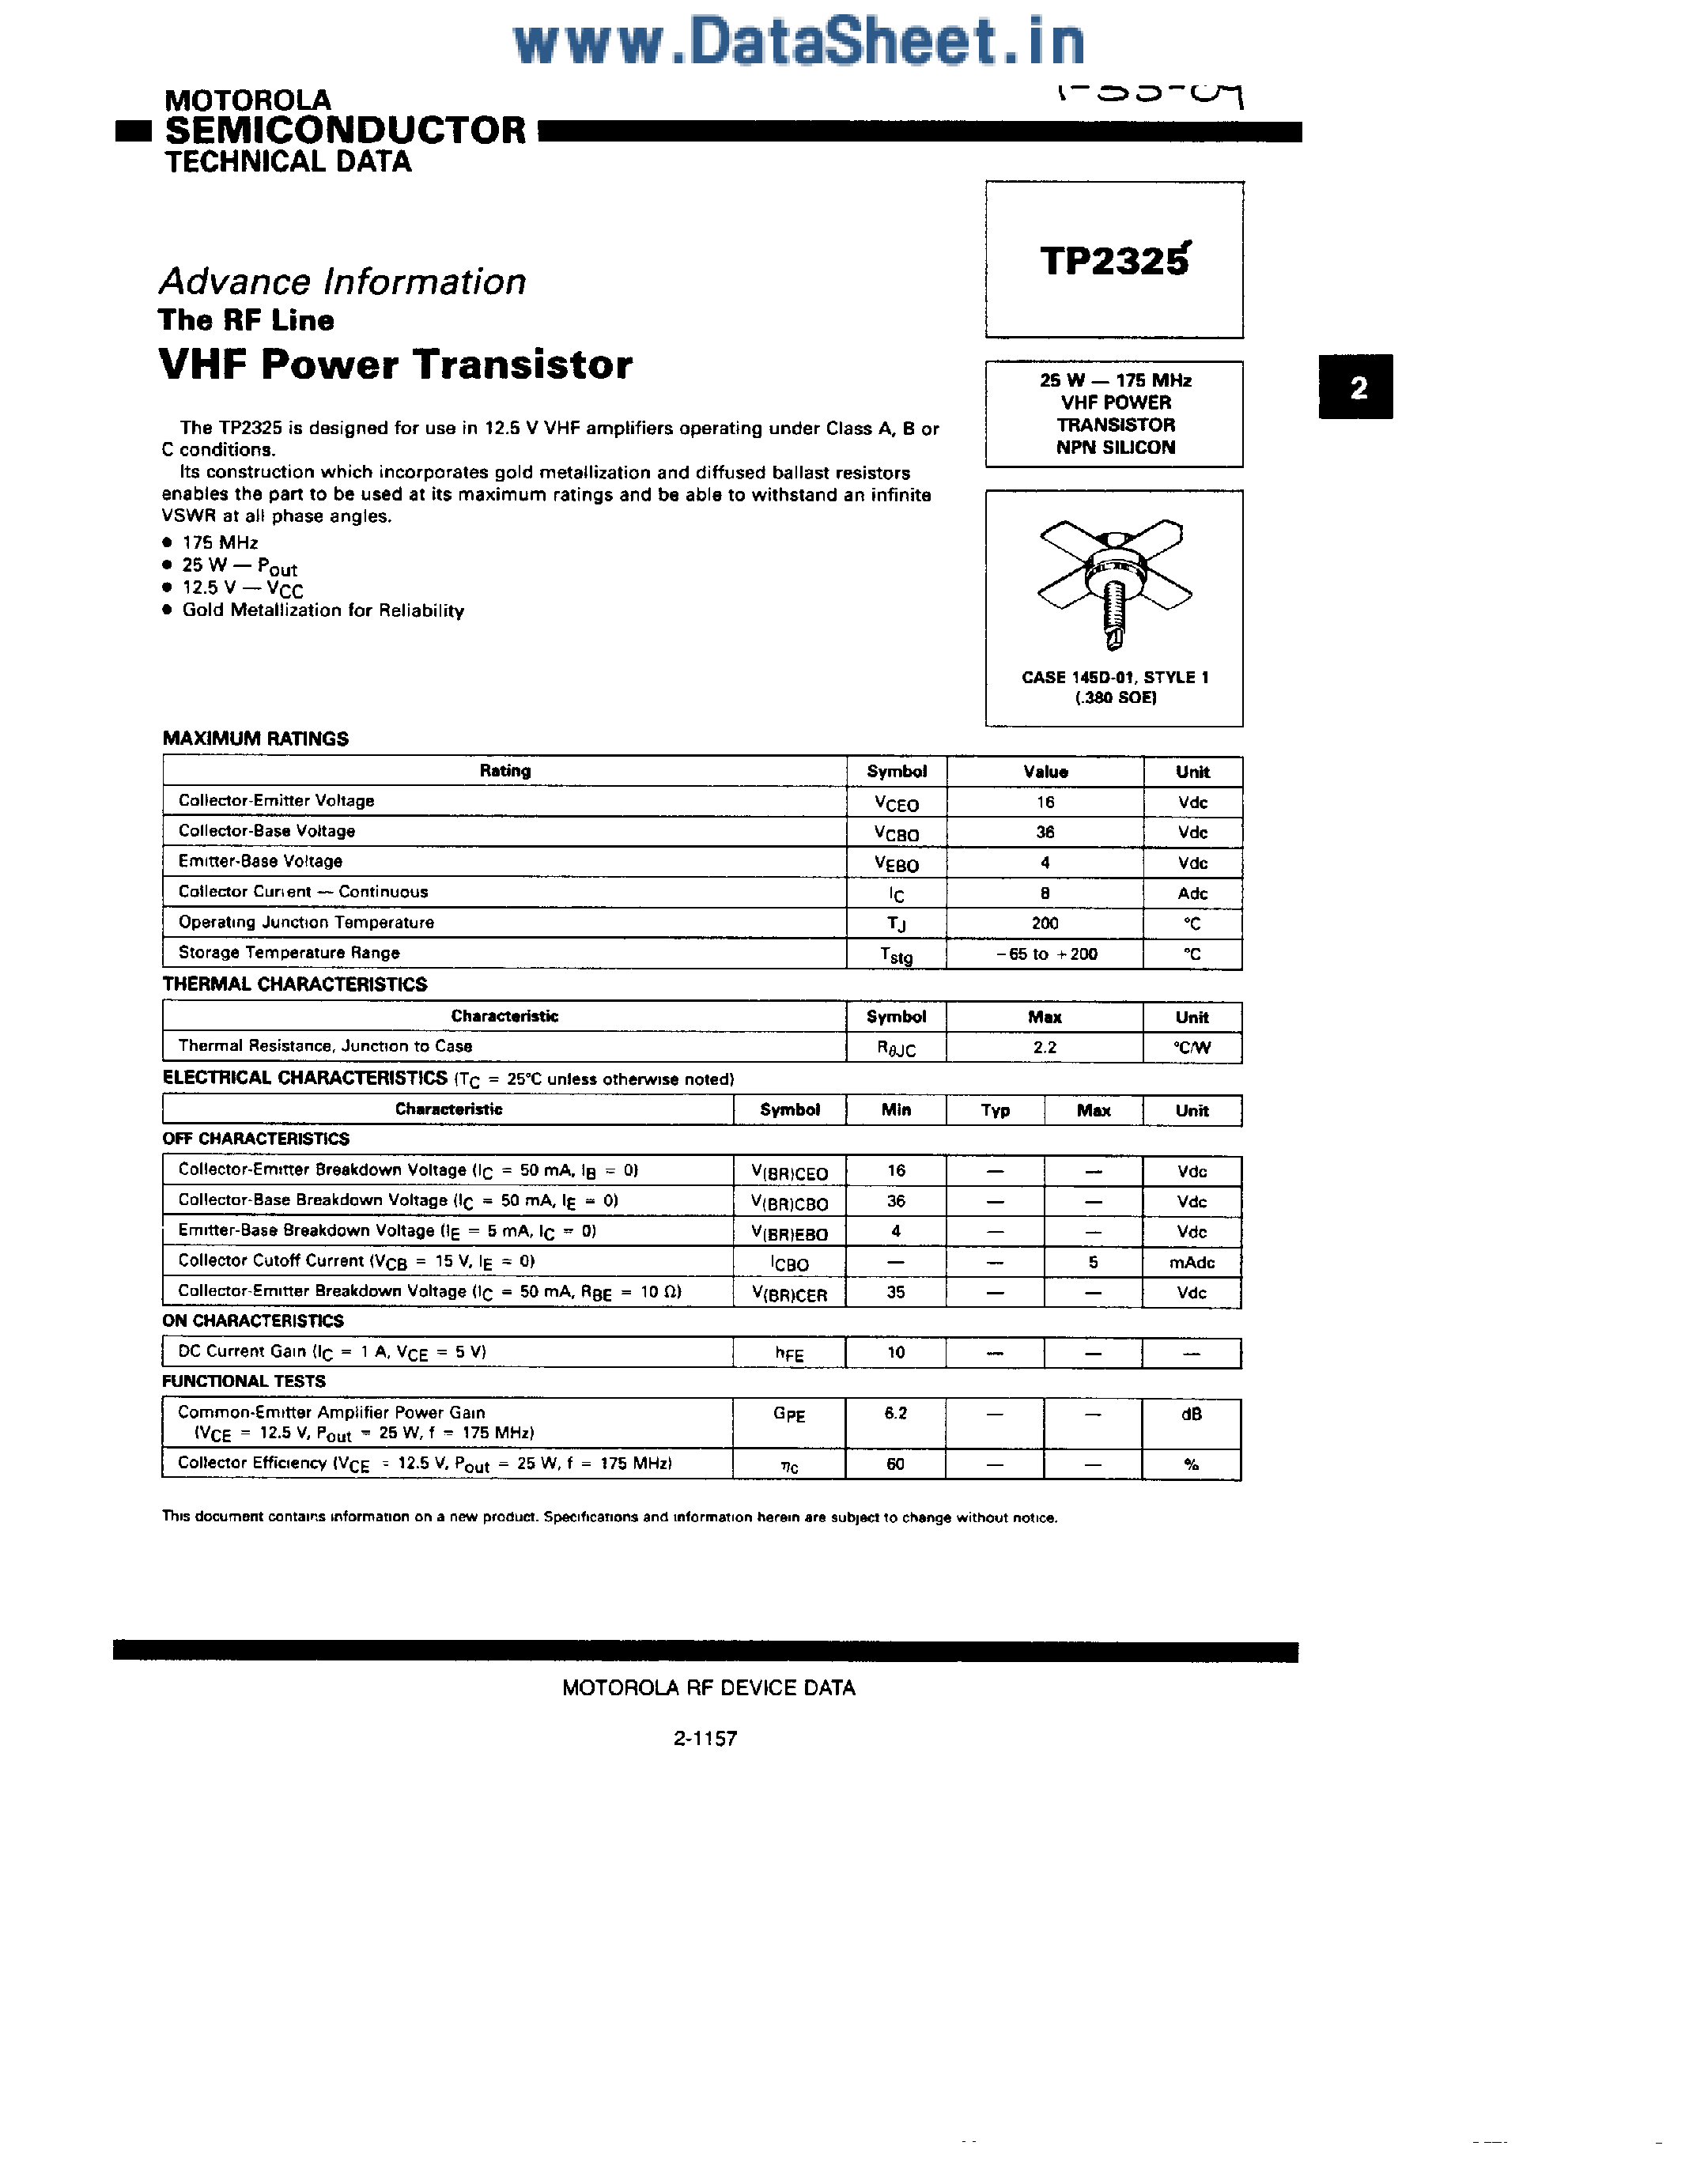 Datasheet TP2325 - VHF Power Transistor page 1